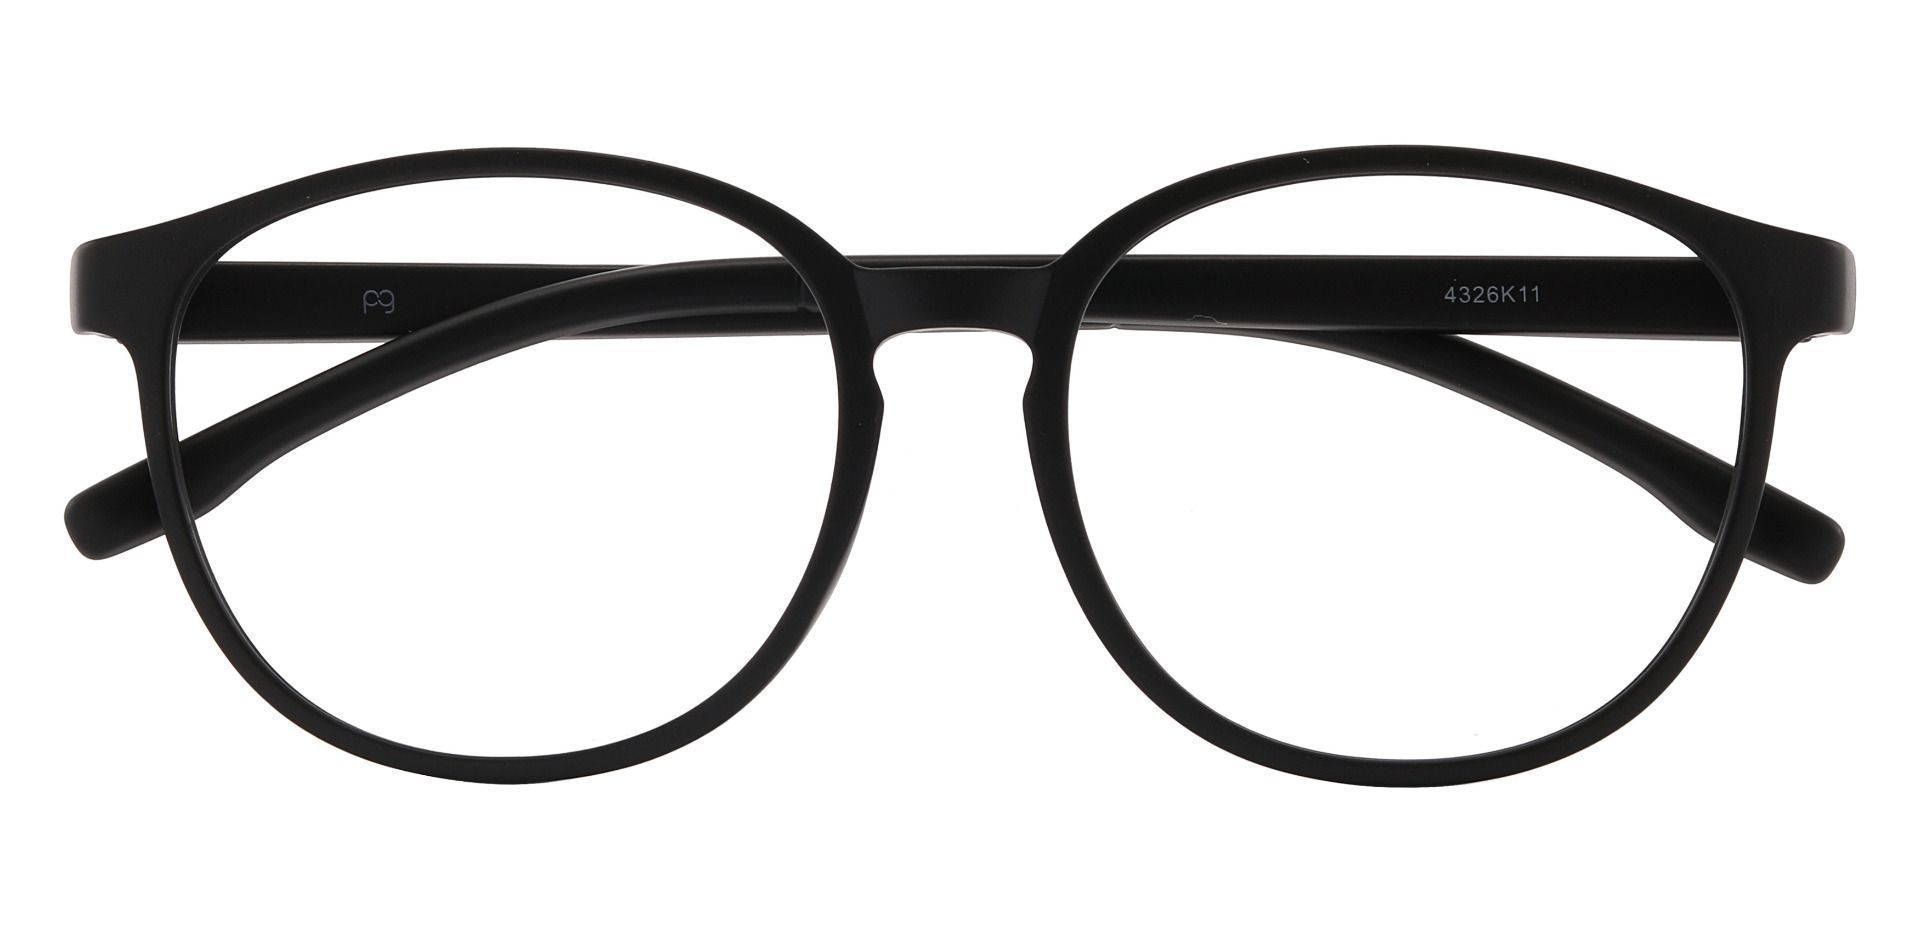 Molasses Oval Lined Bifocal Glasses - Black